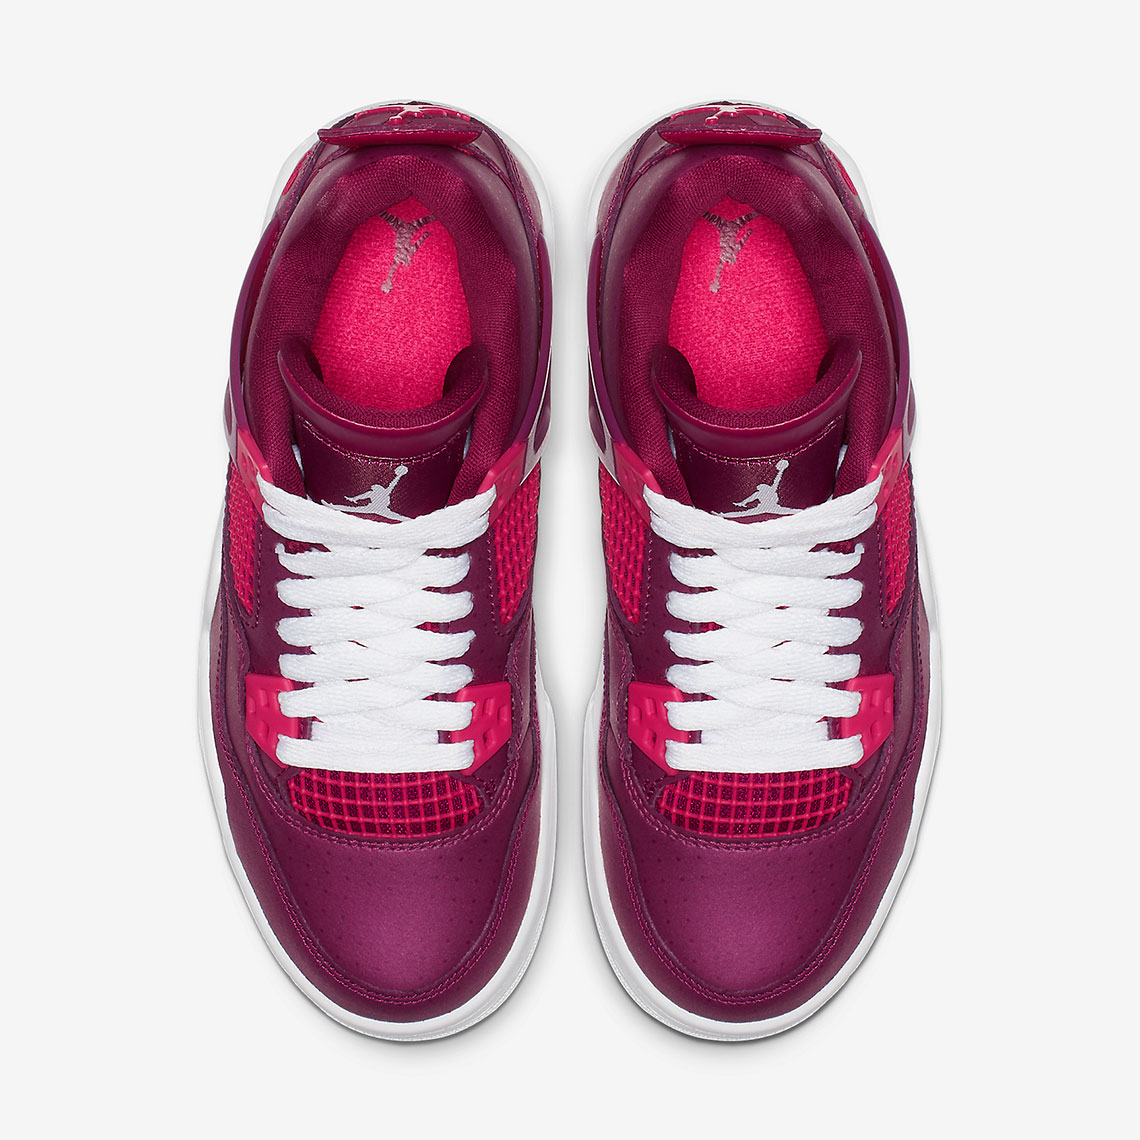 Jordan 4 Berry Pink 487724 661 Release / Store List